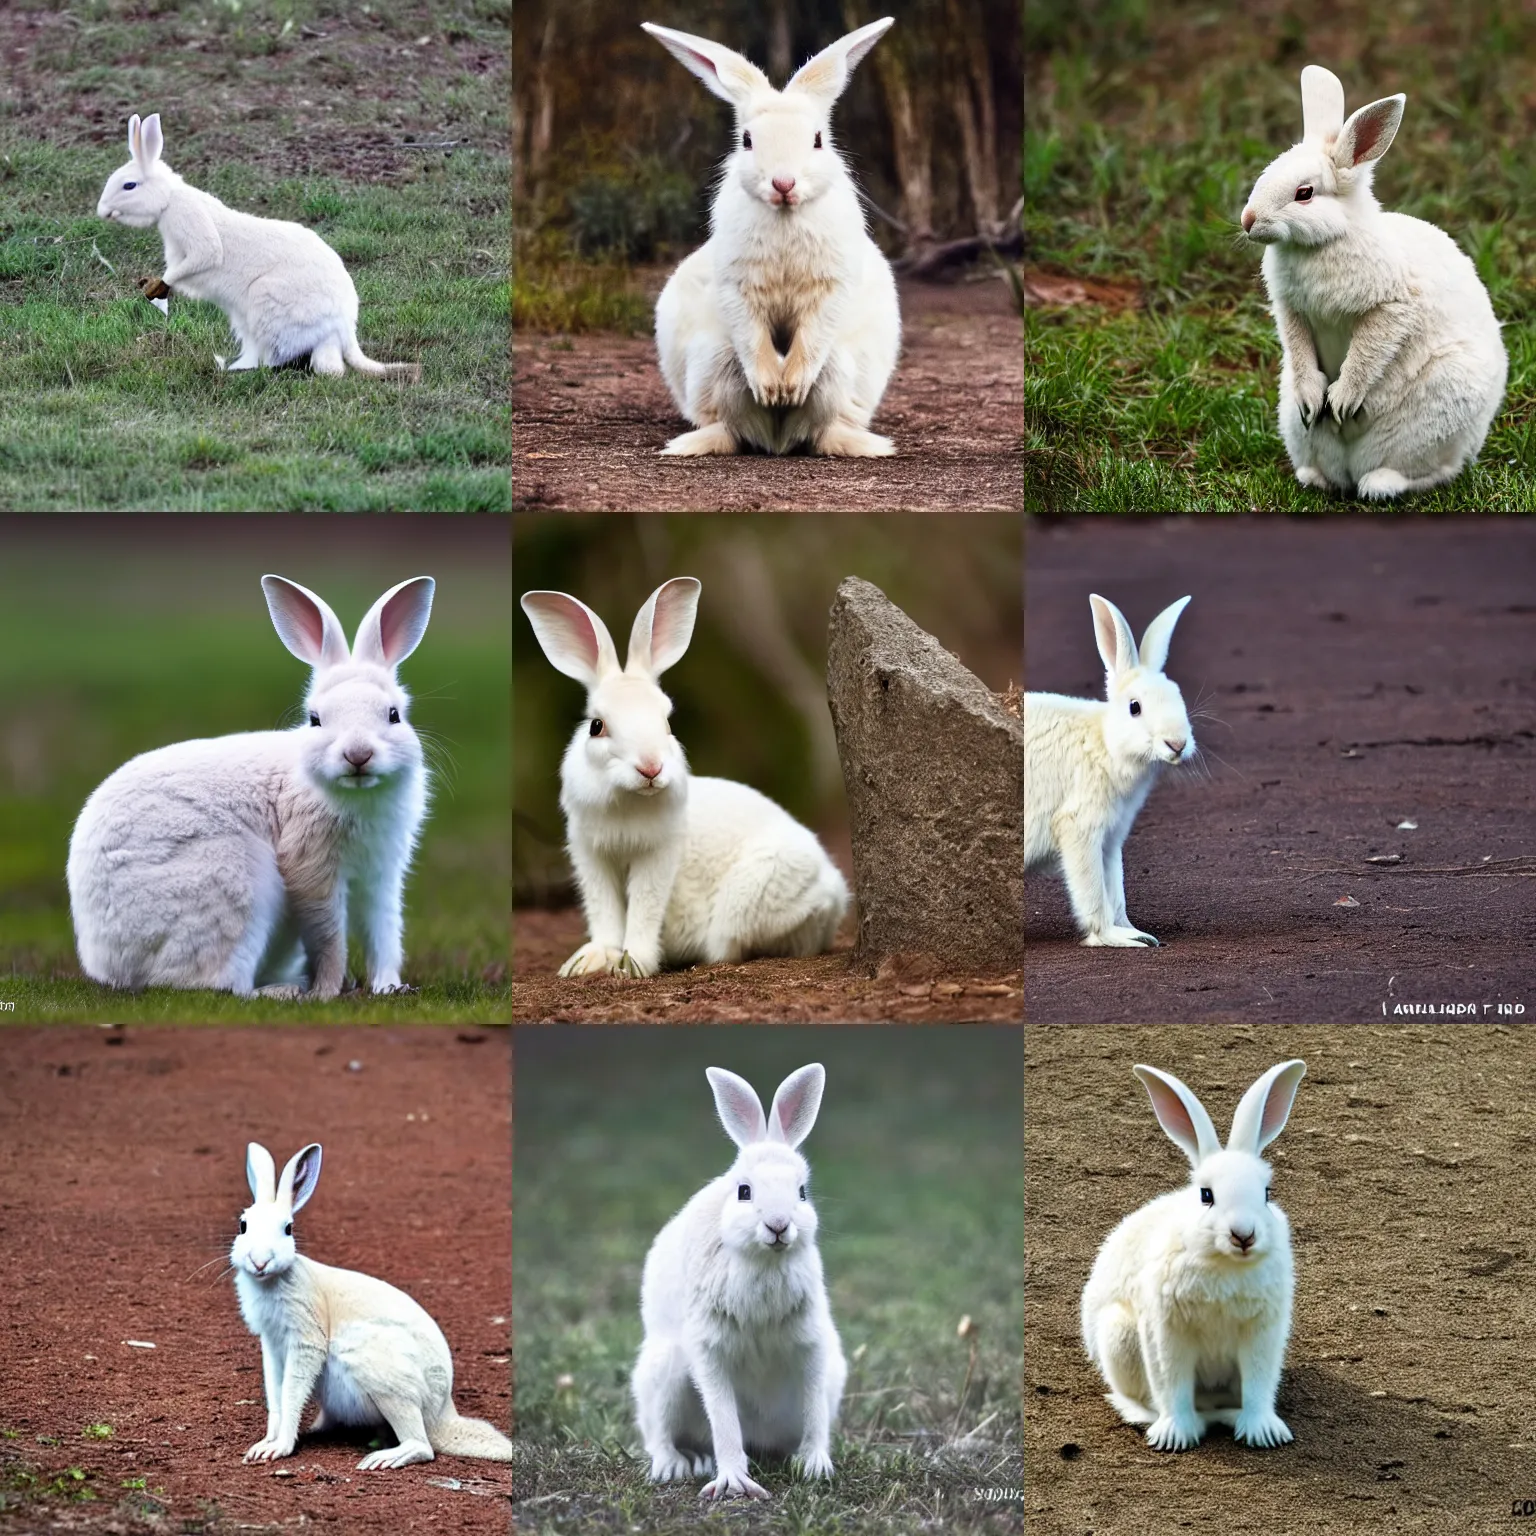 Prompt: photograph of a rare white rabbit kangaroo hybrid, 4 k, award winning photo